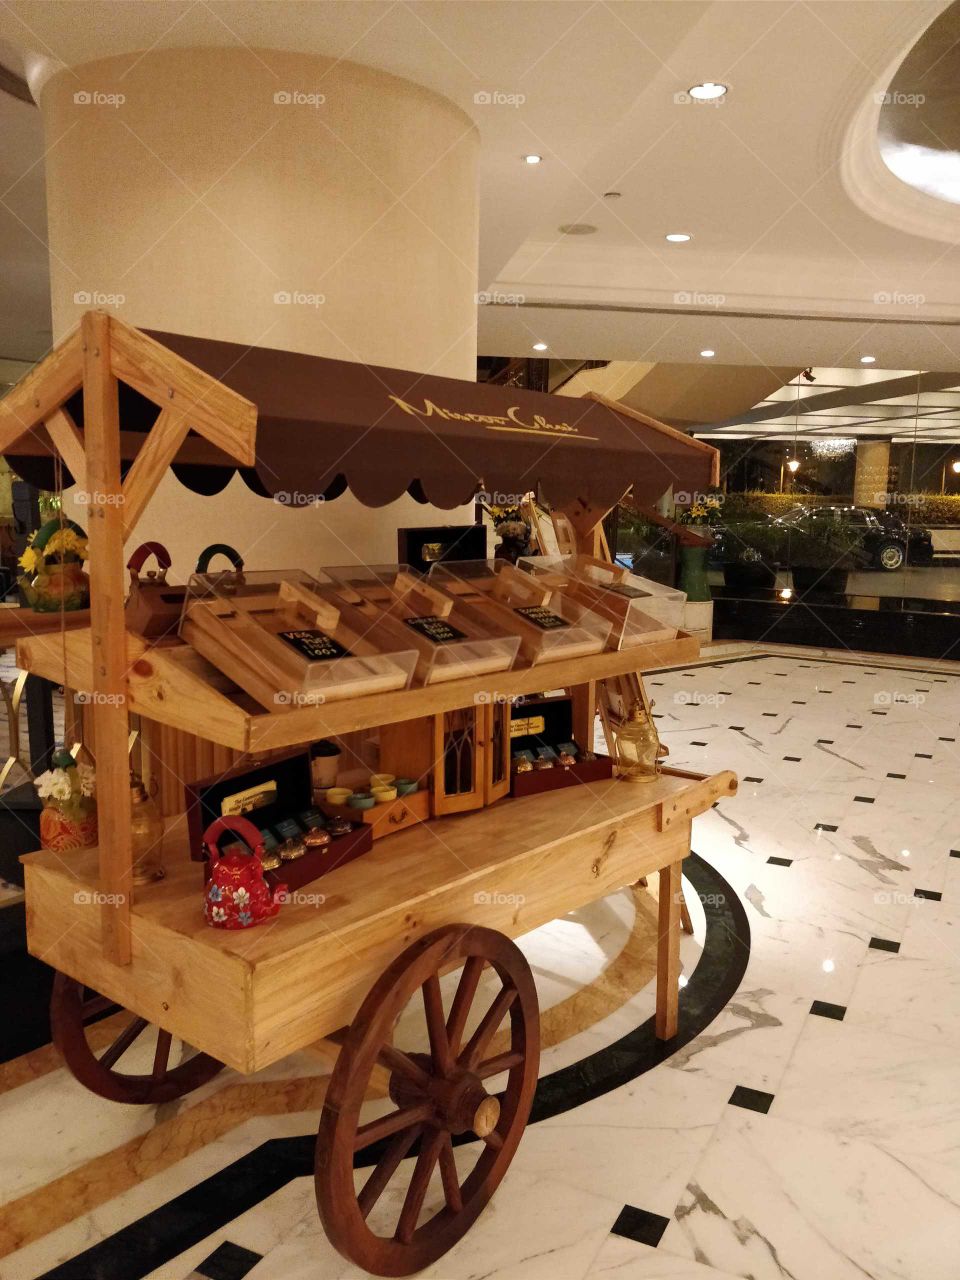 food cart inside a five star hotel lobby